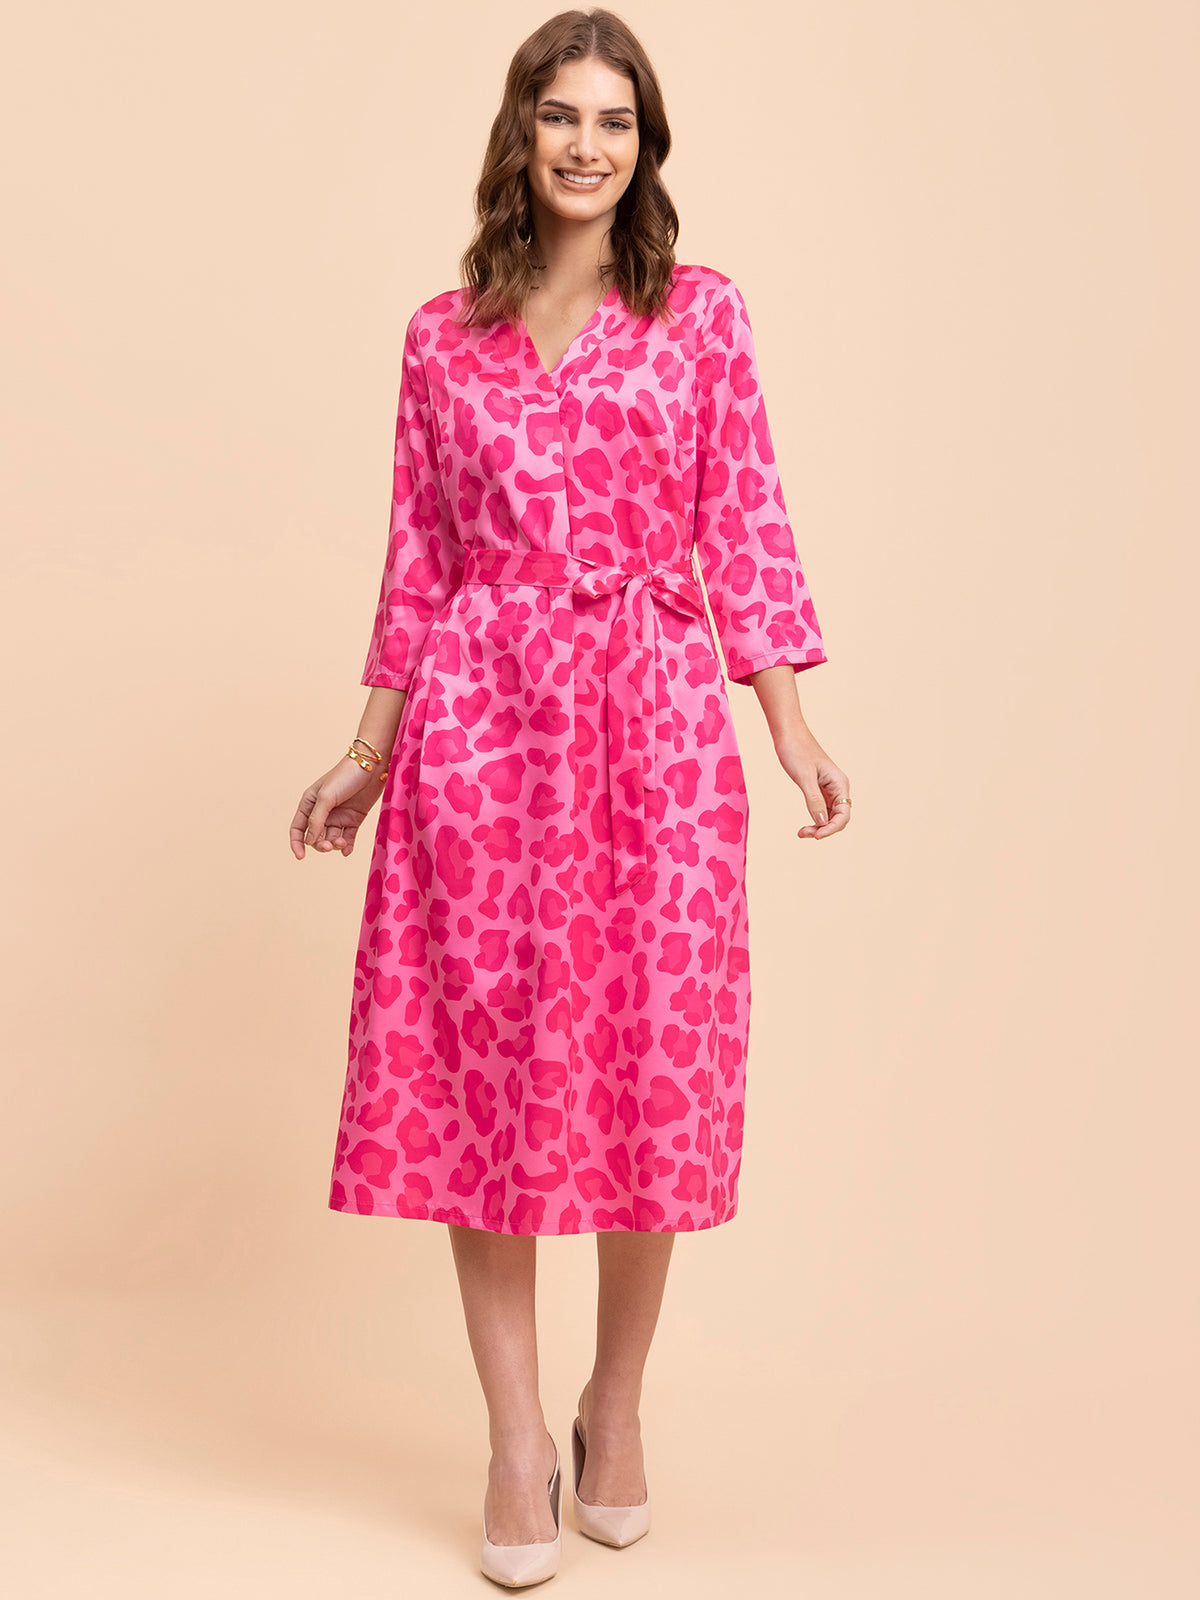 Satin Animal Print A-Line Dress - Fuchsia and Pink